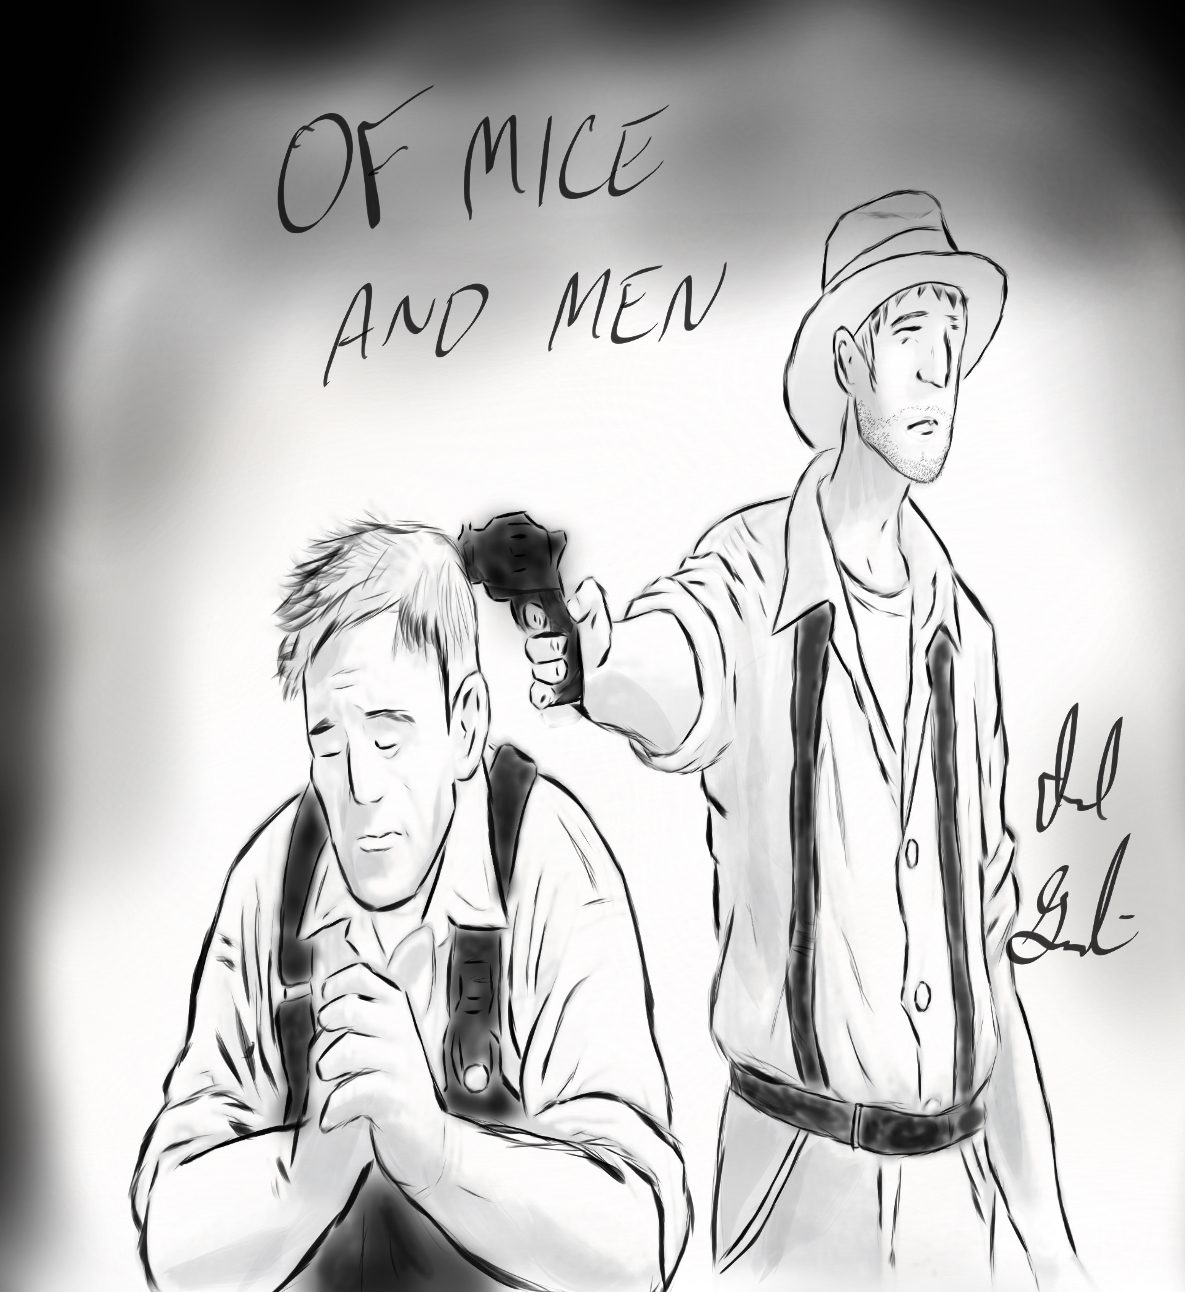 Mice And Men Drawing Pics